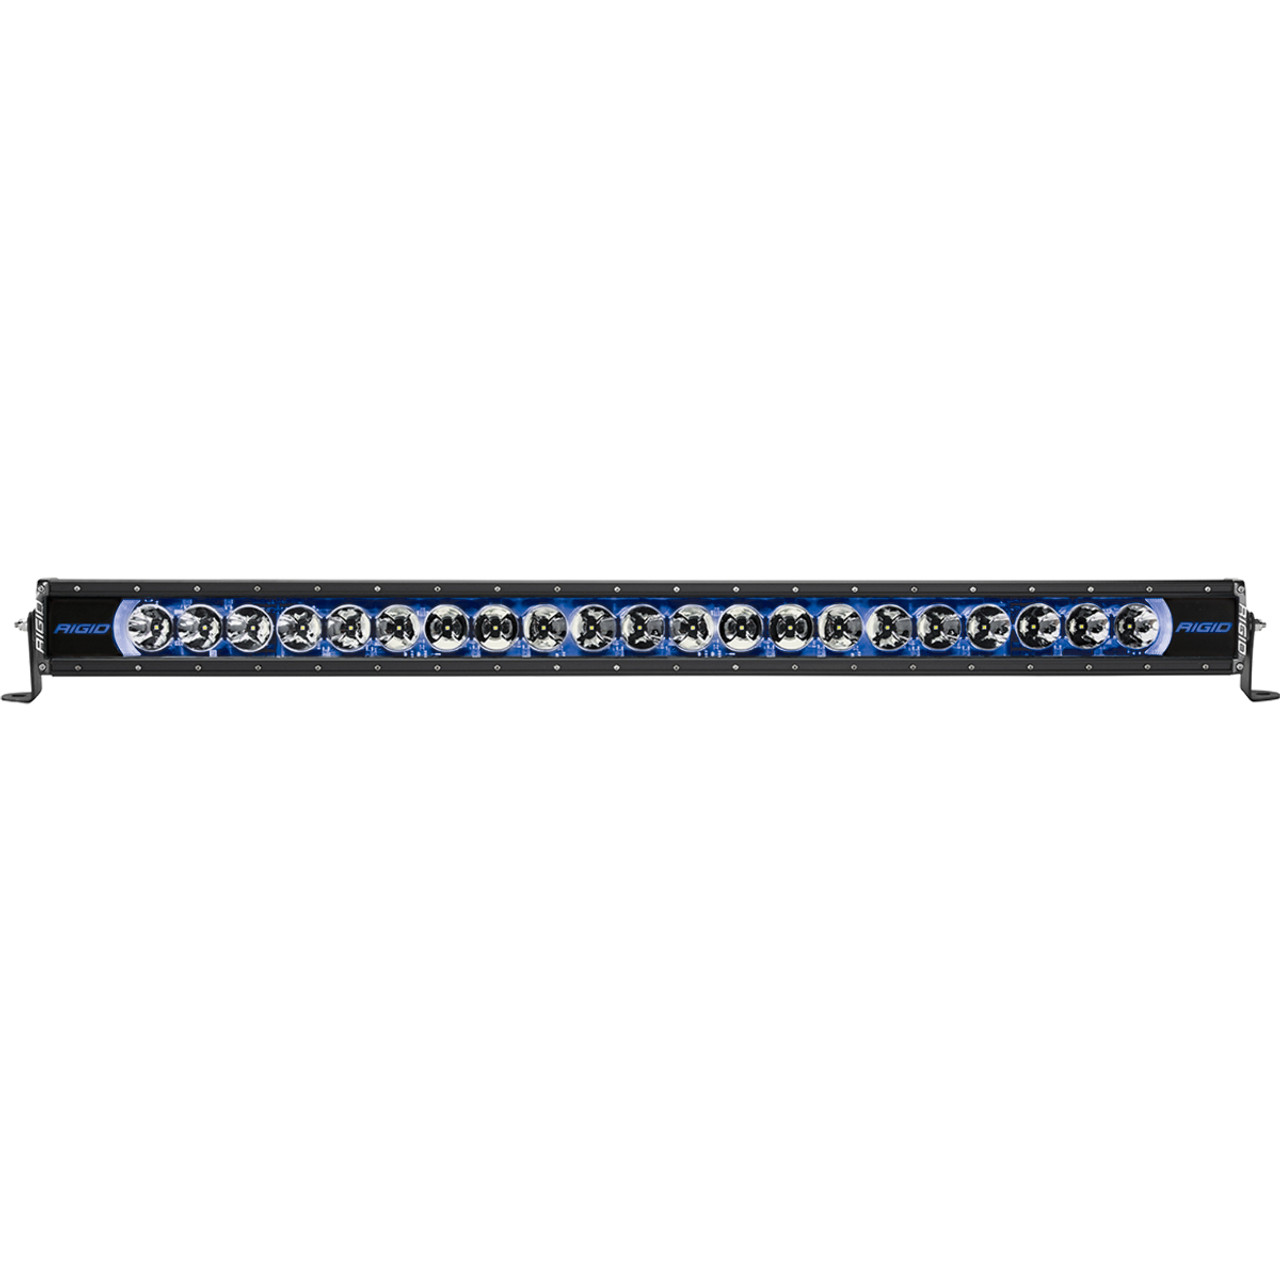 Rigid Industries 240603 40" LED Light Bar Radiance+ SR-Series RGBW 8 Backlight